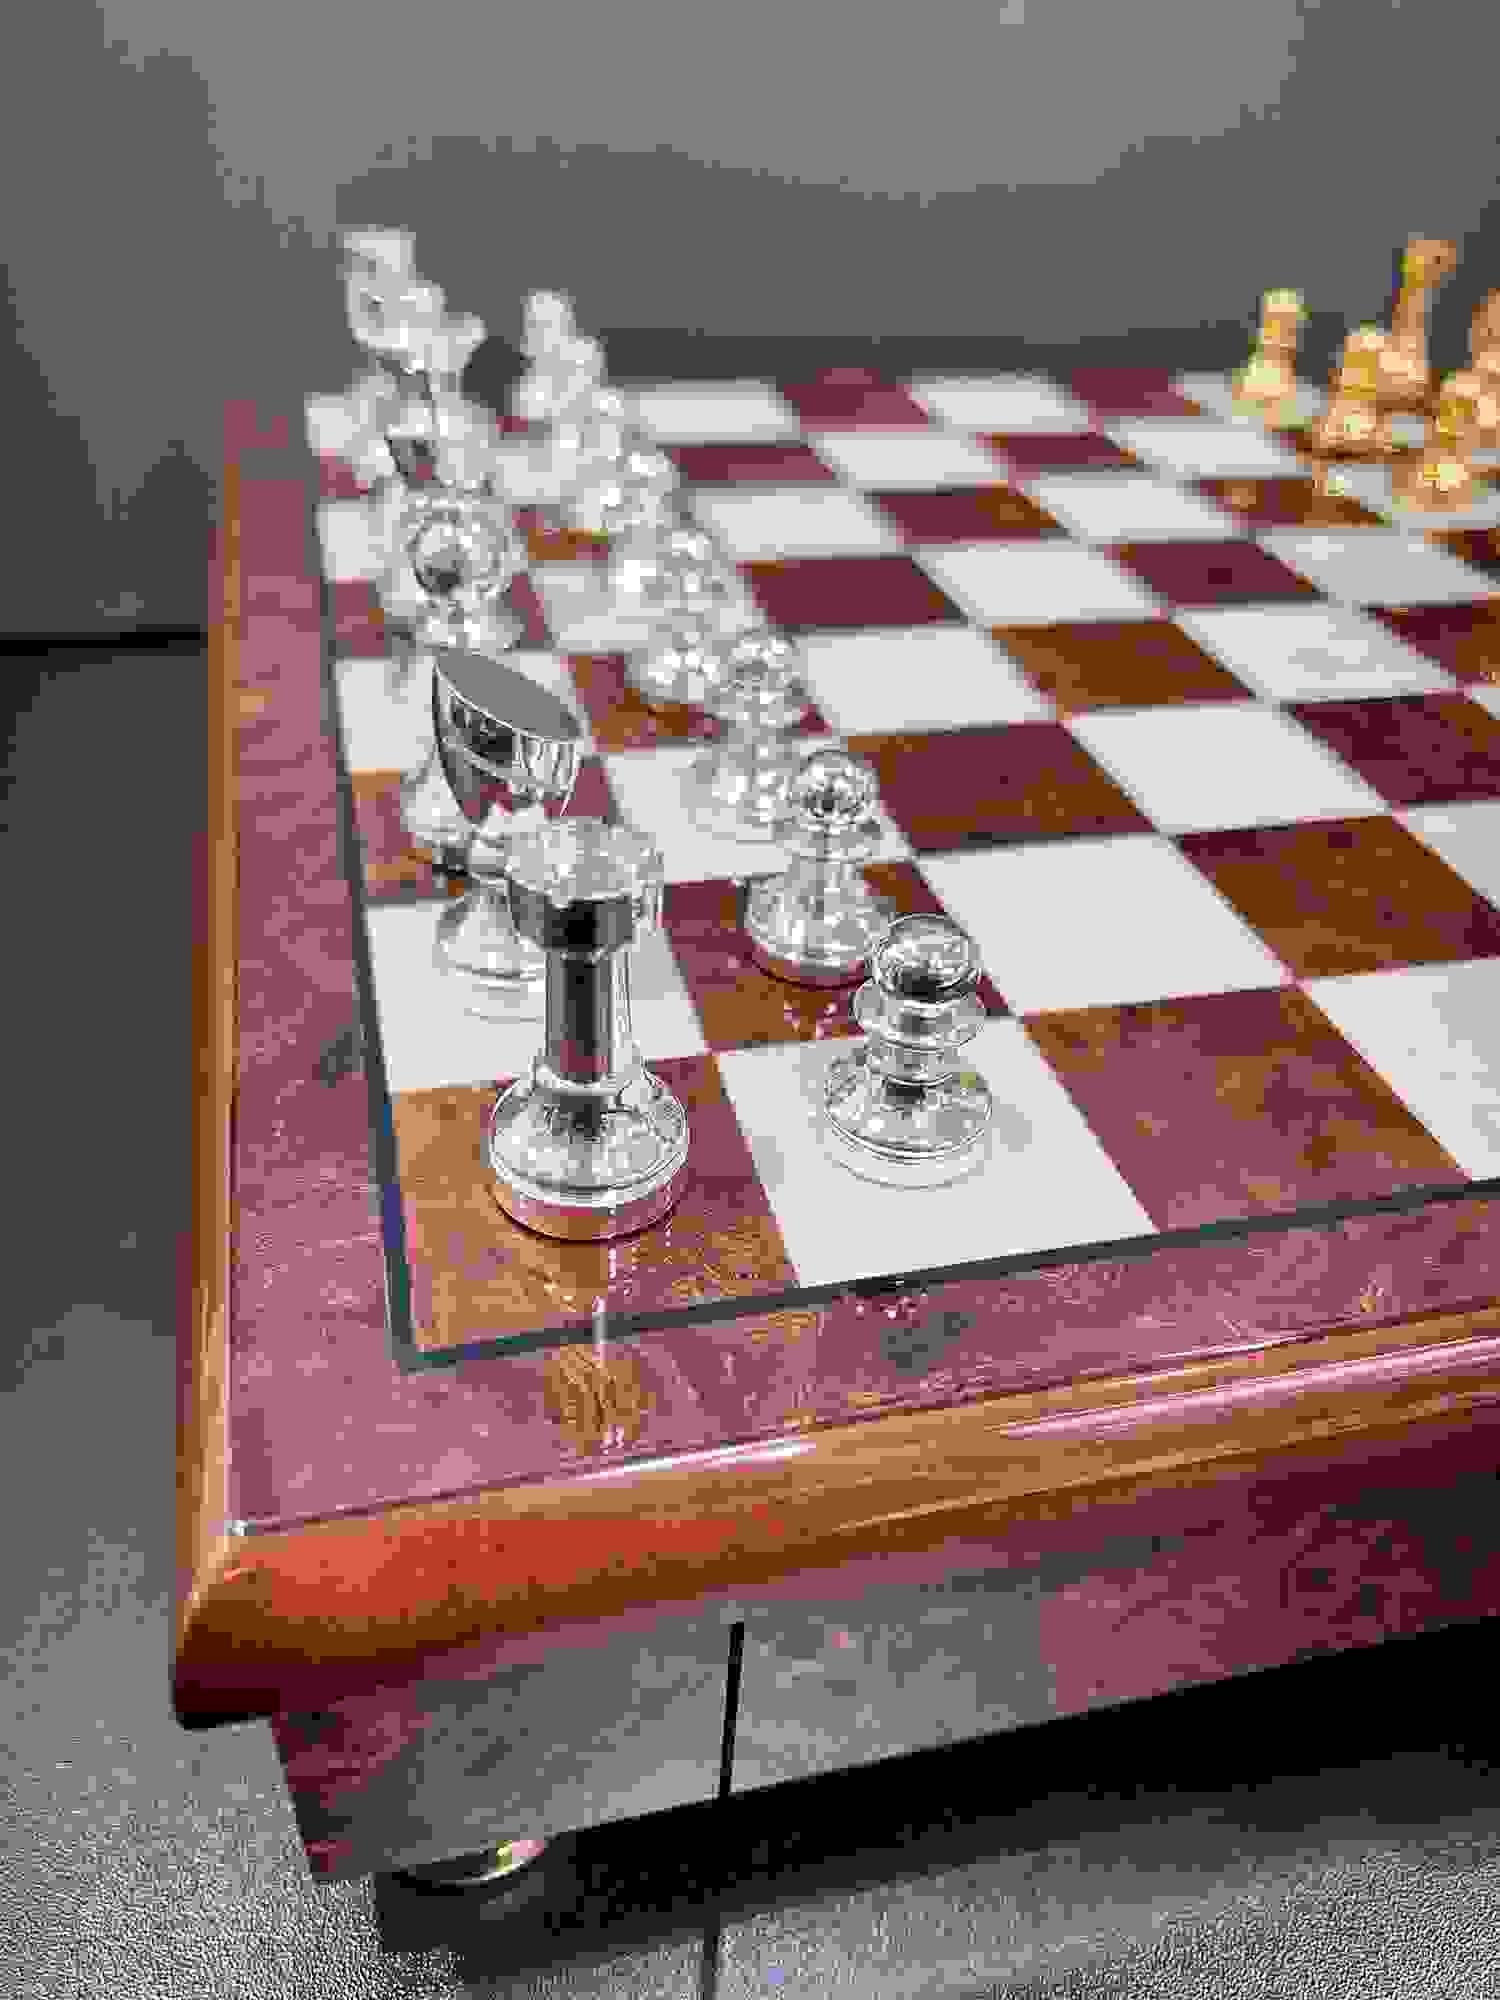 Italfama Glossy ELM Briar Wood Chess Set 40GS + 333OLP